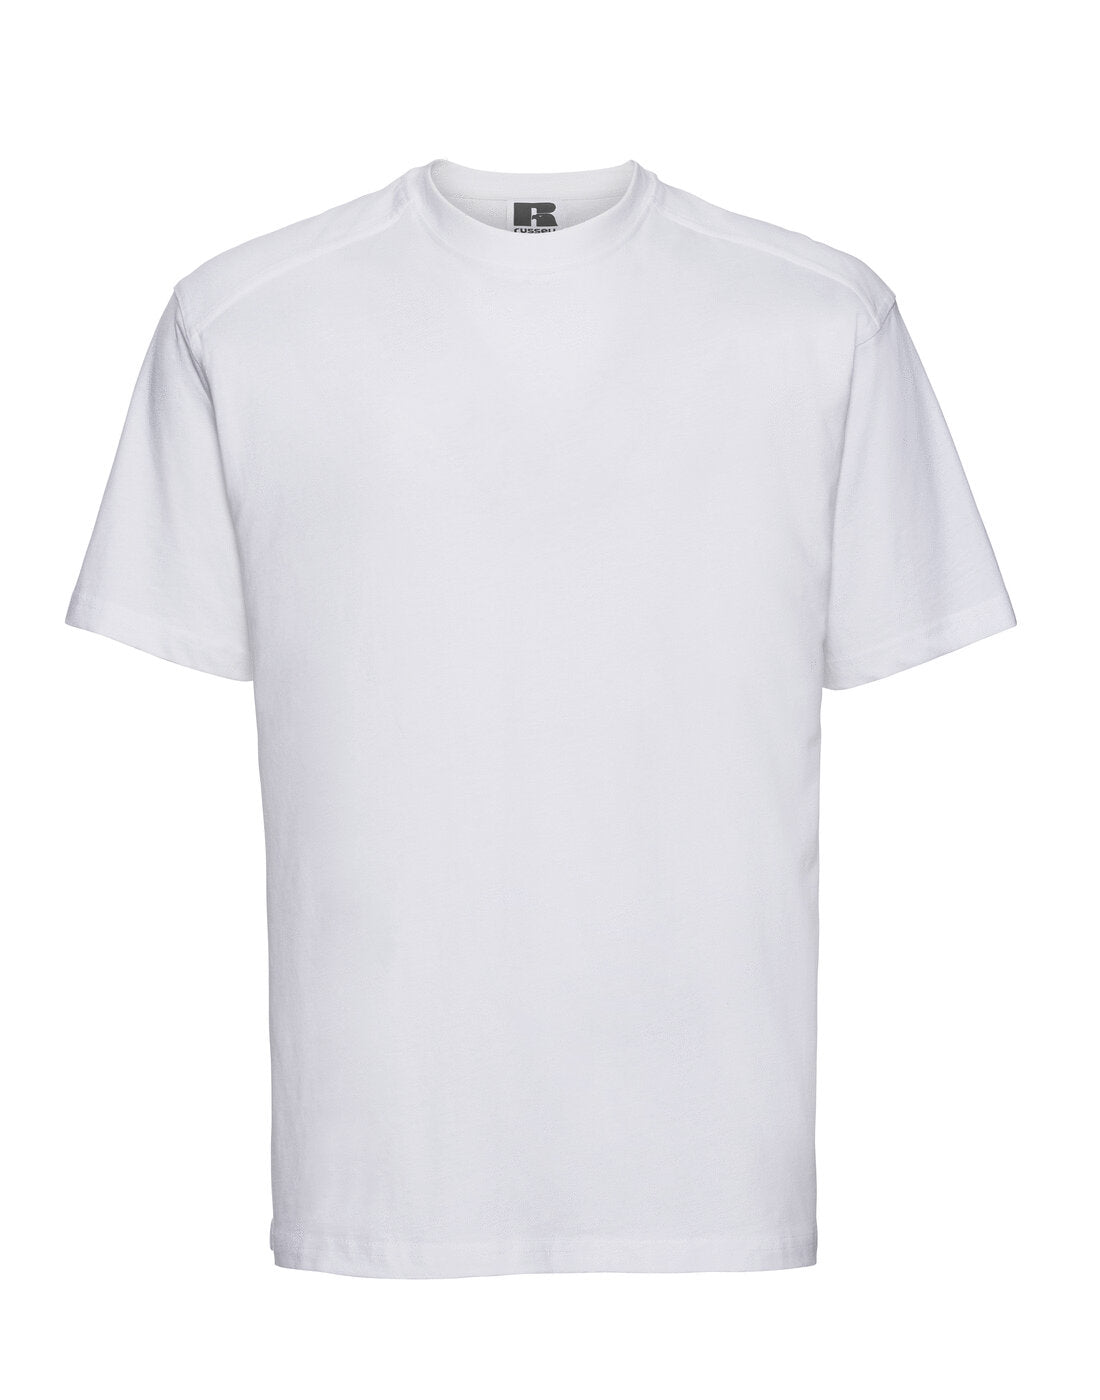 Russell Heavy Duty Workwear T-Shirt - White